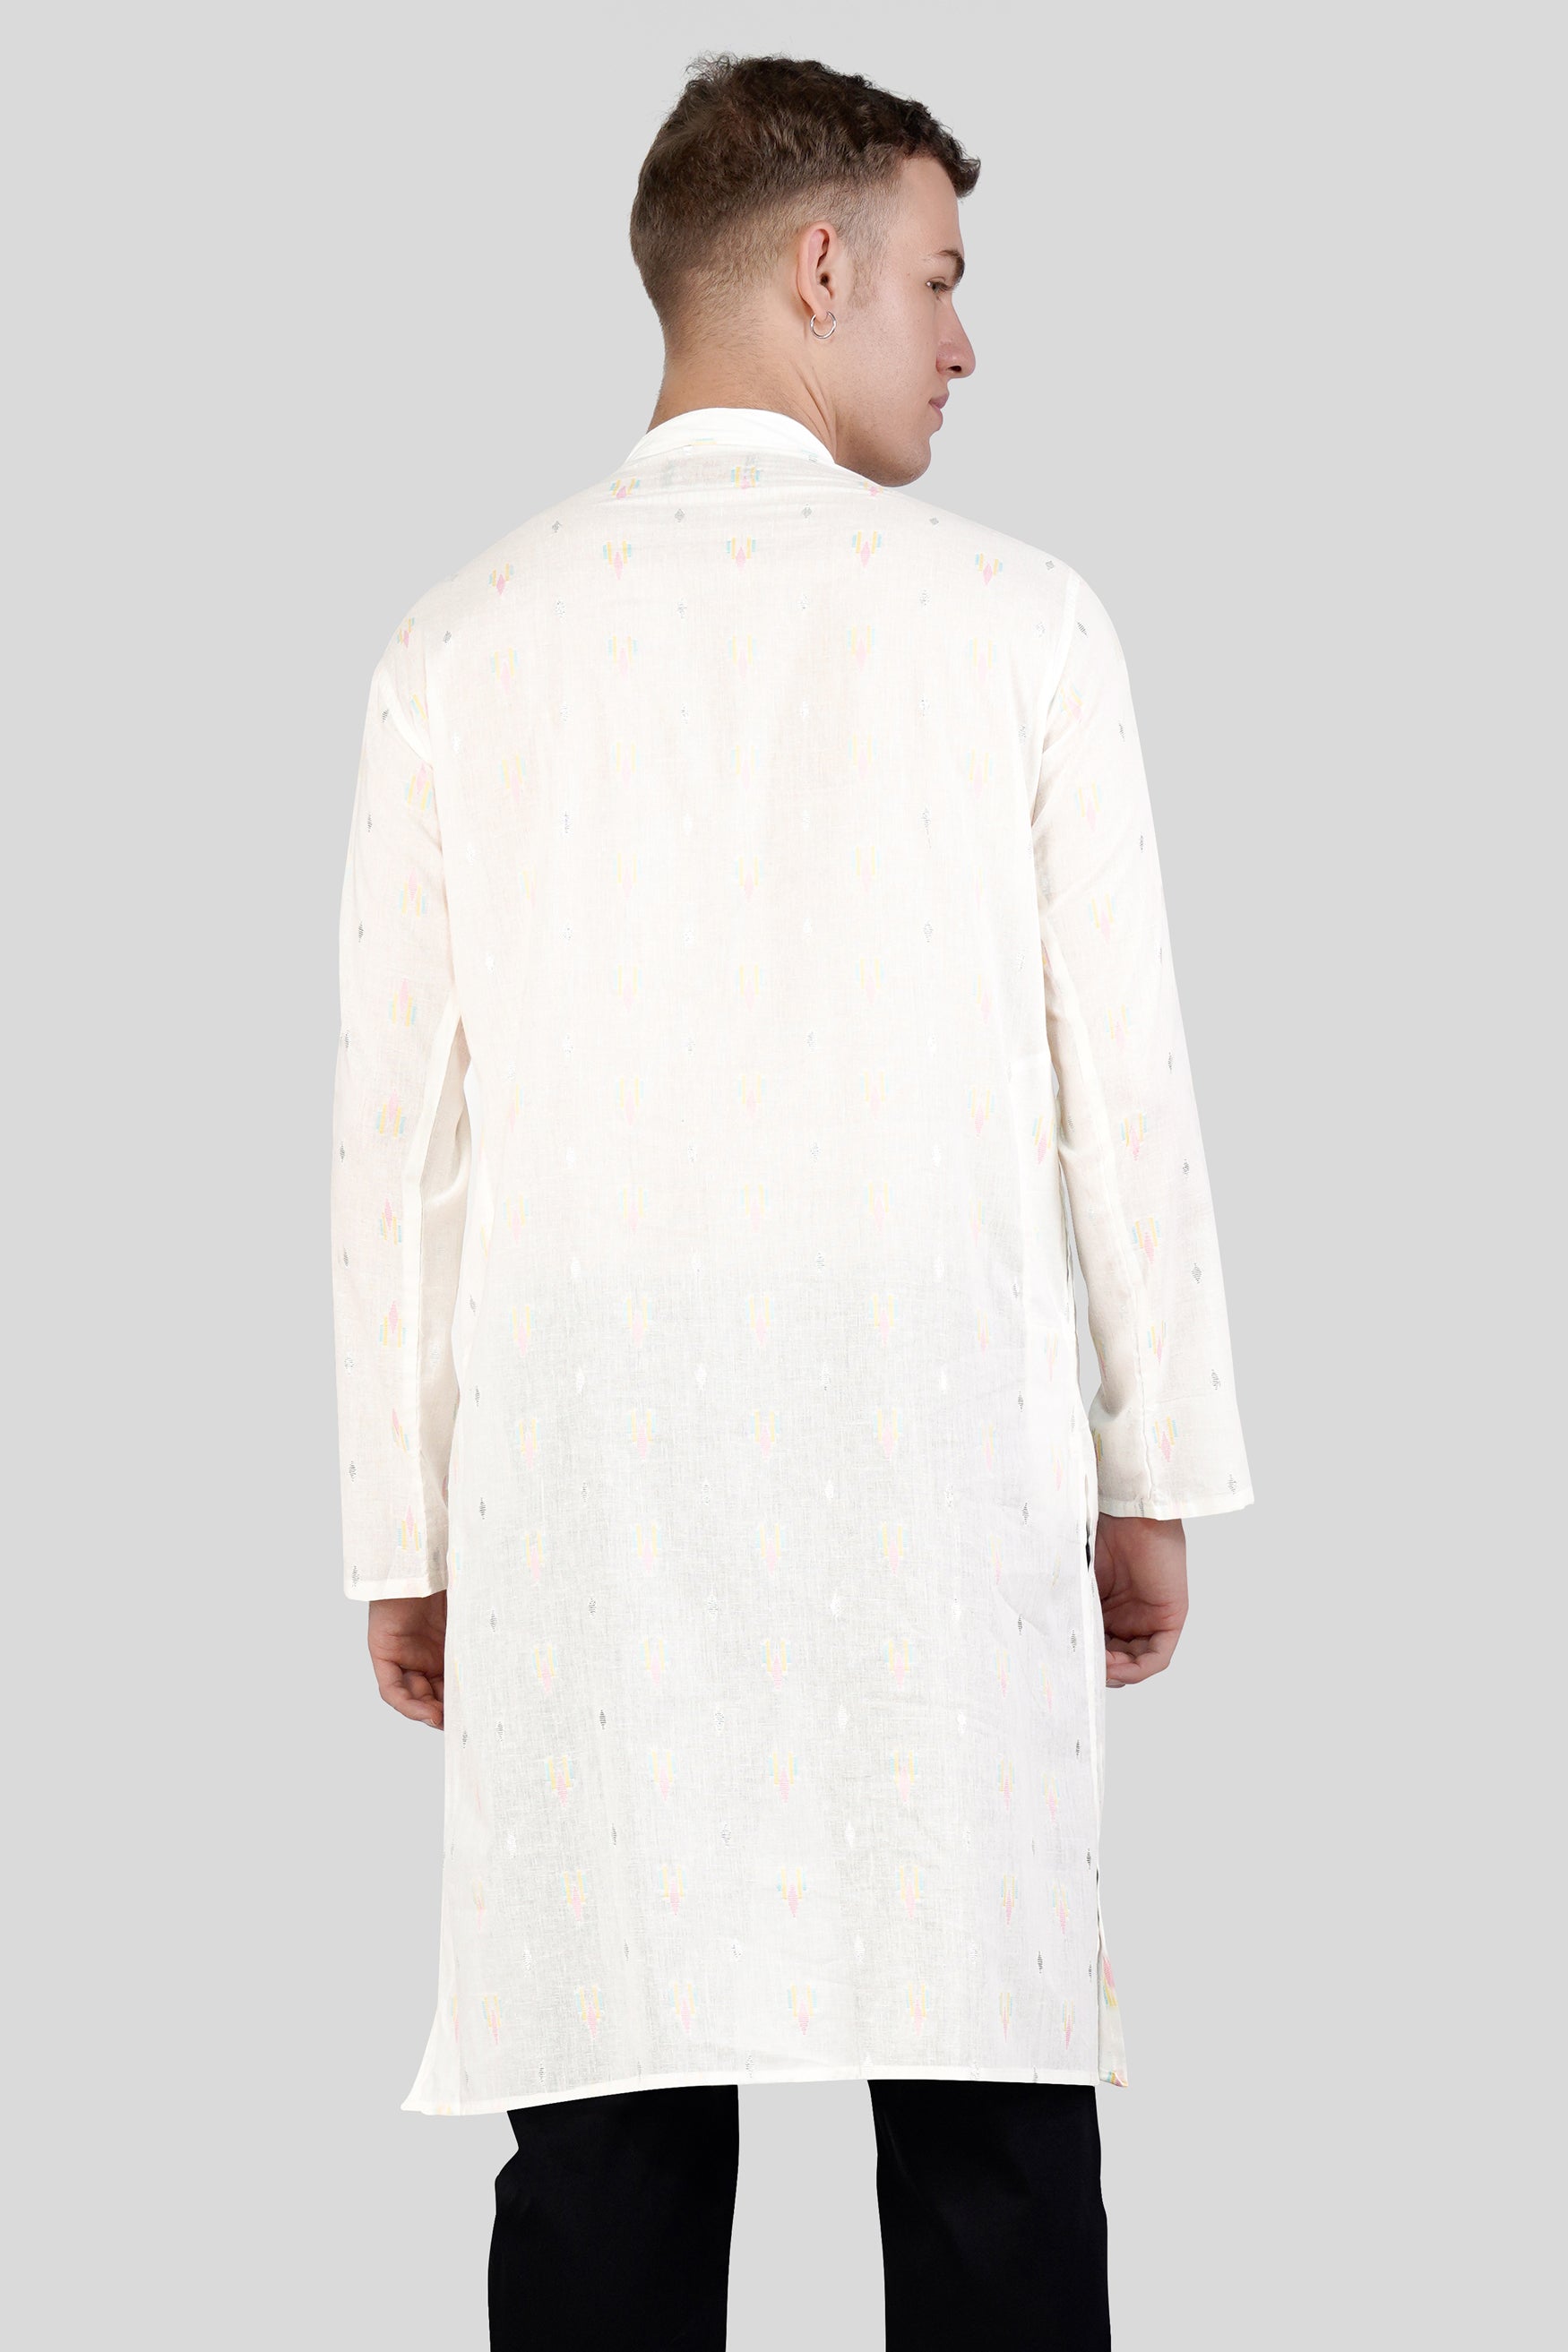 Off White colorful and silver Jacquard Textured Premium Giza Cotton Kurta